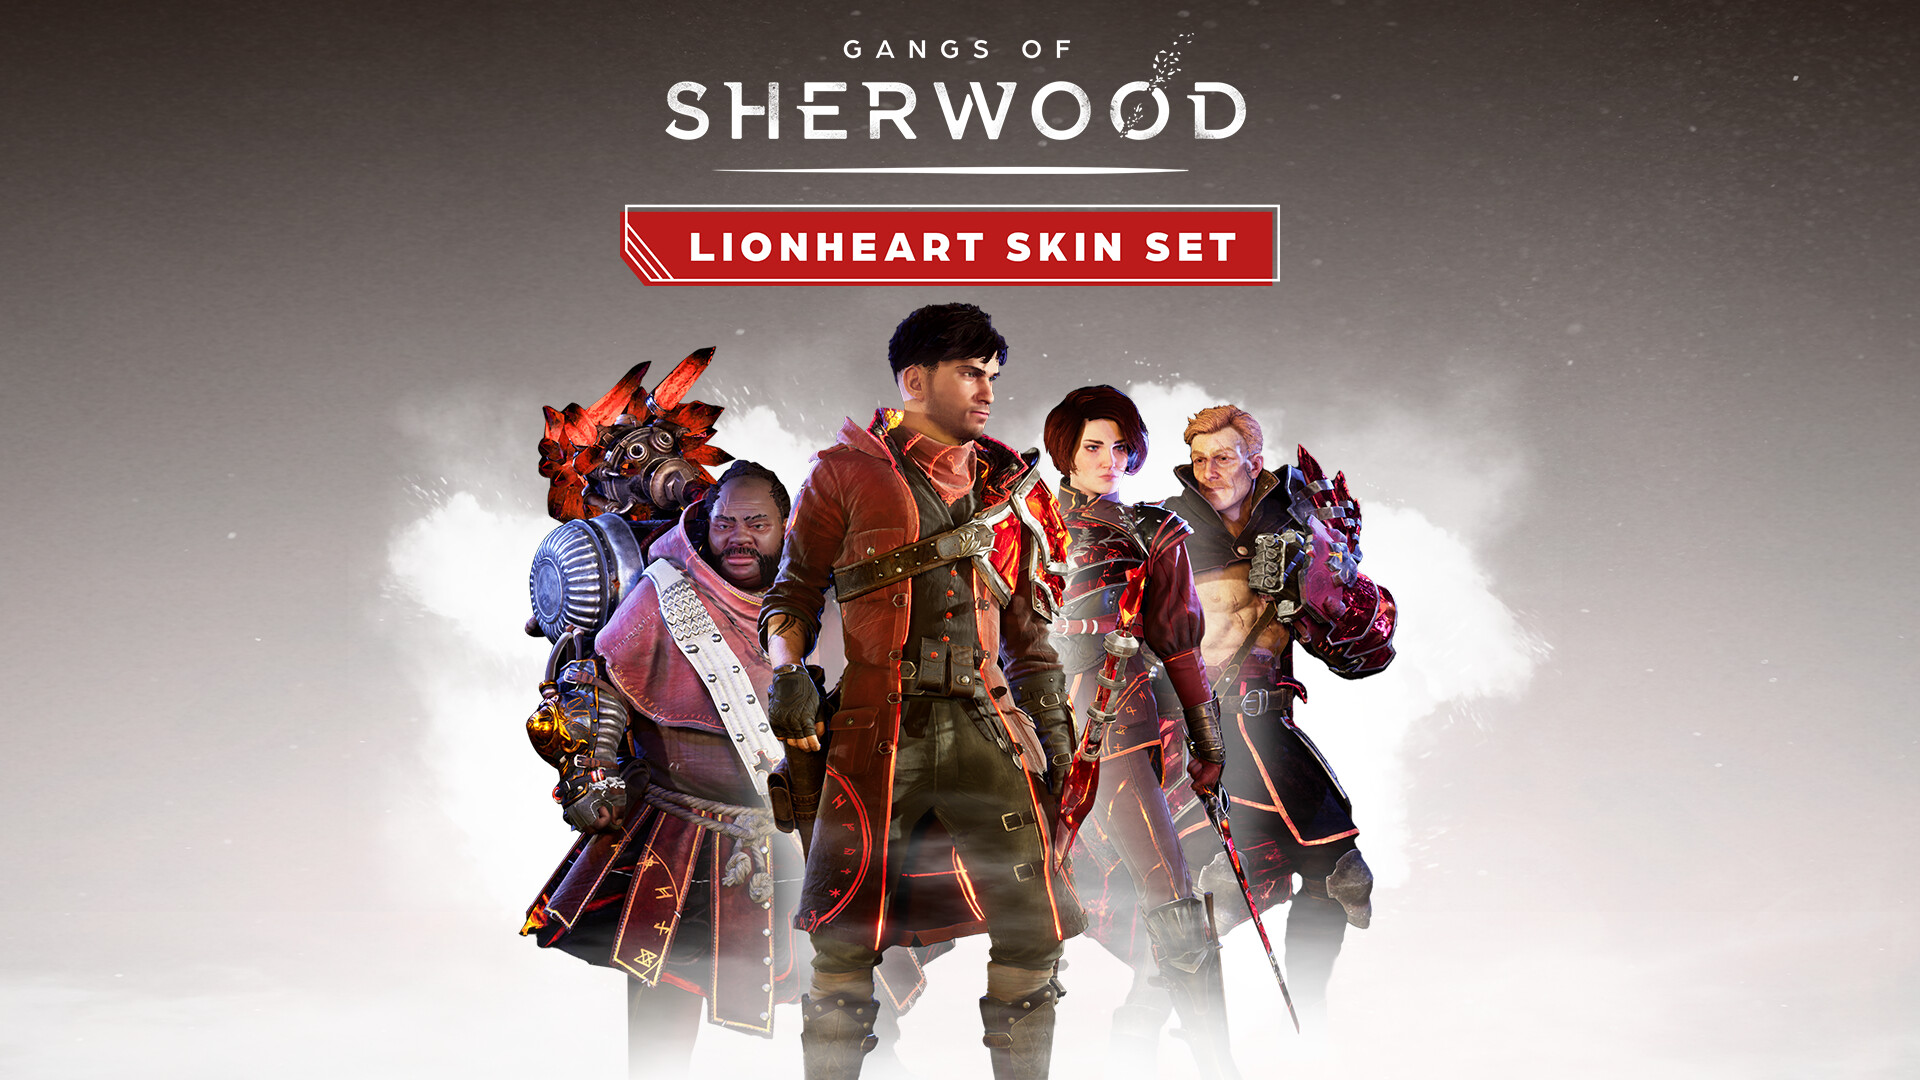 Gangs of Sherwood - Lionheart Skin Pack Featured Screenshot #1